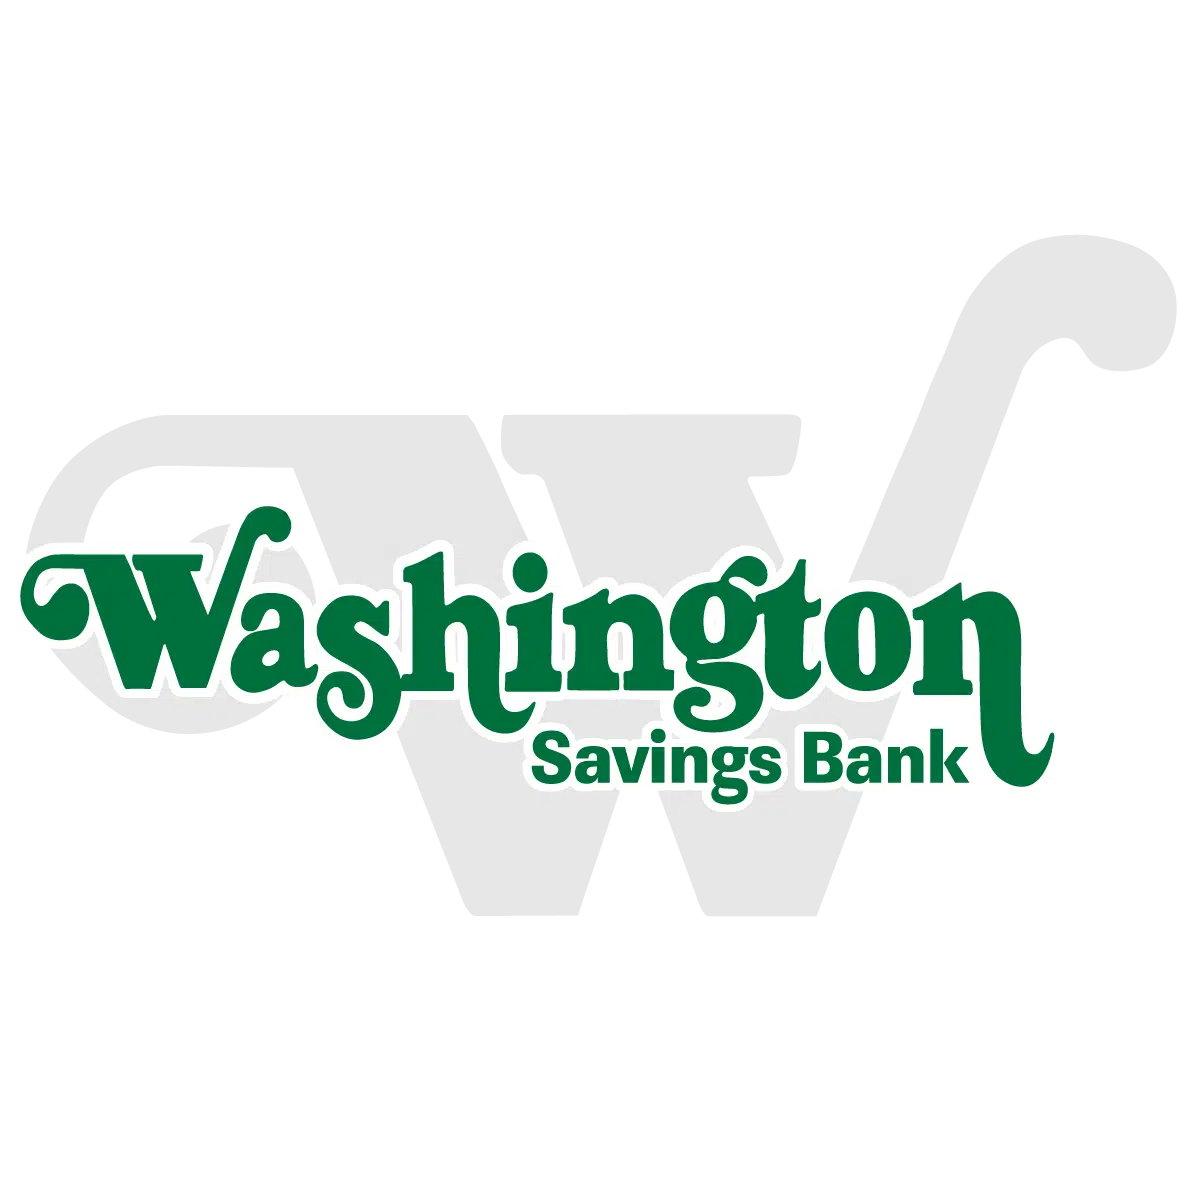 Washington Savings Bank to Acquire The First National Bank